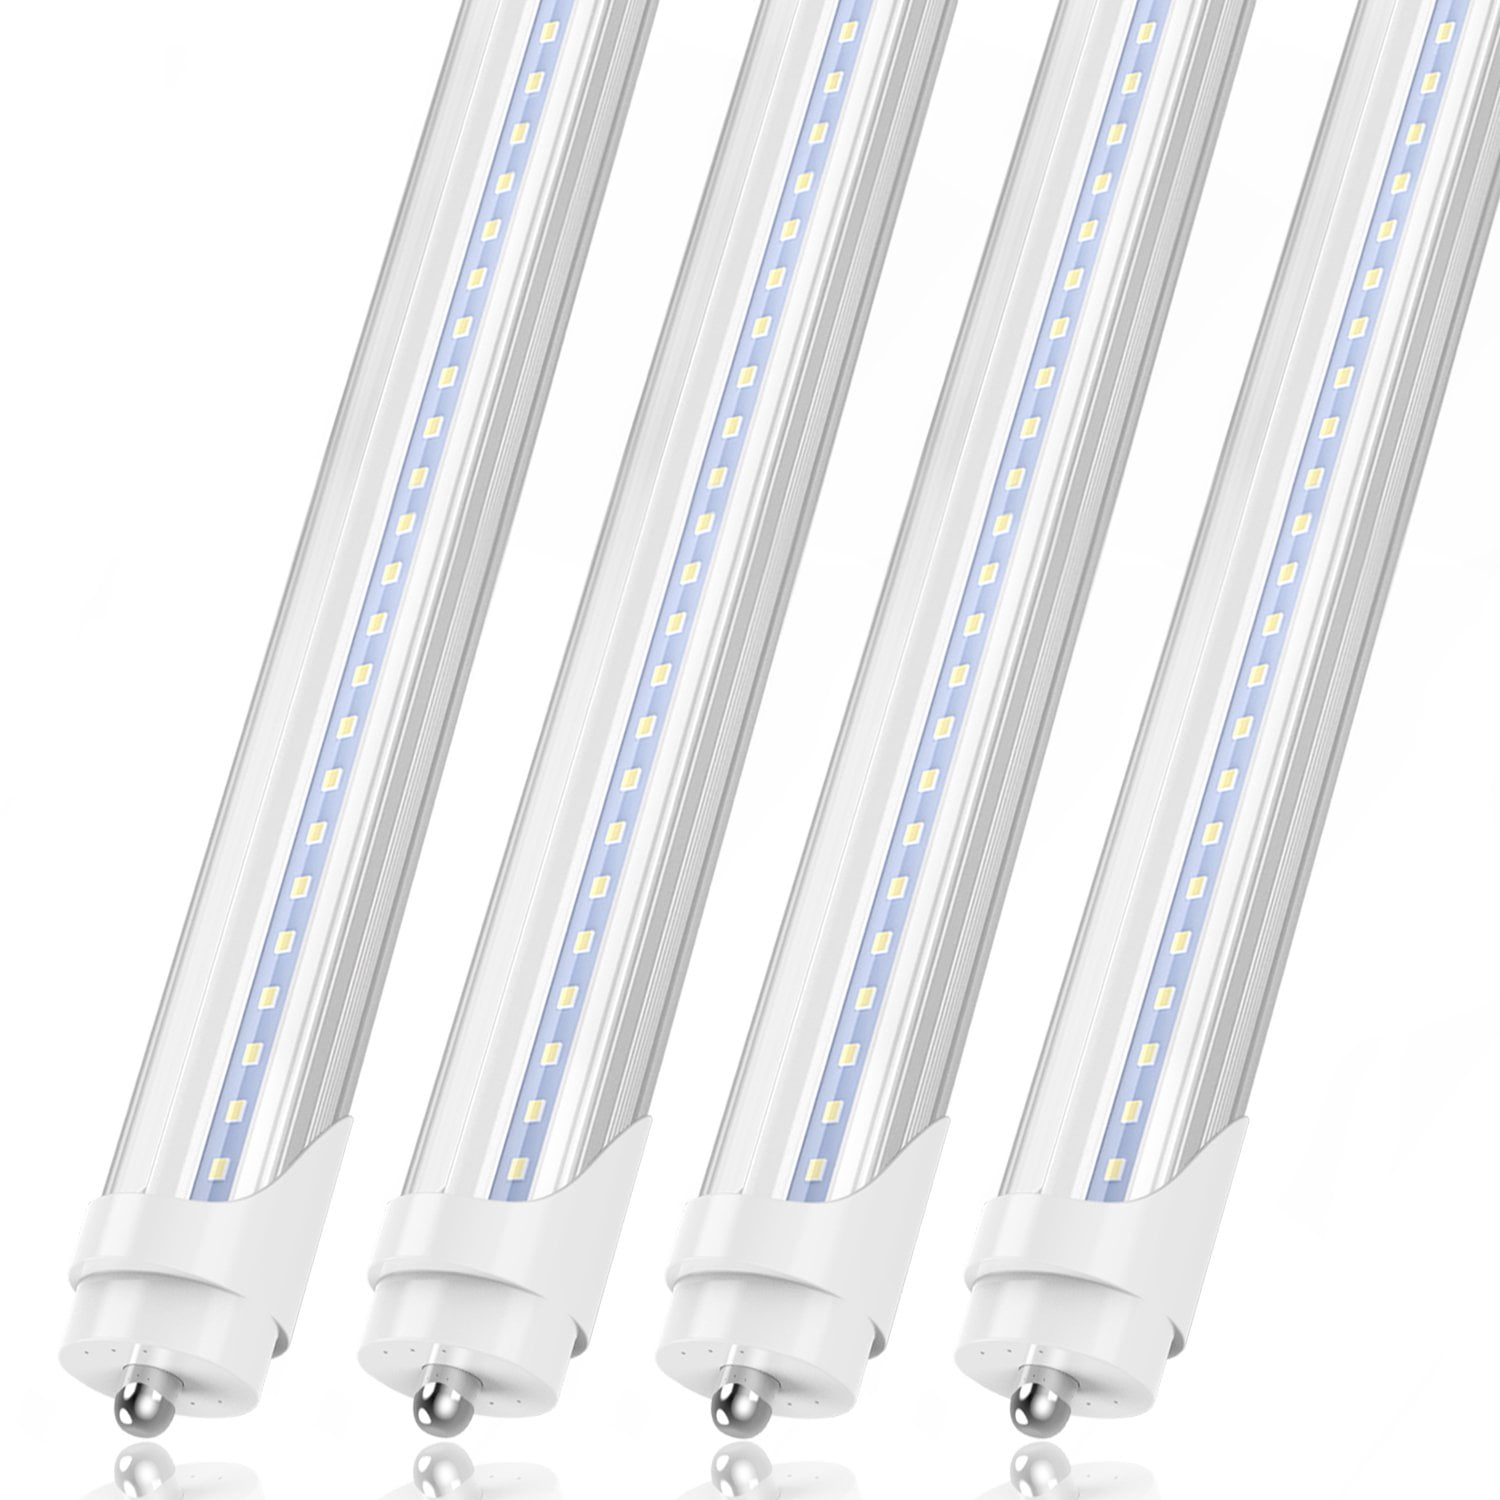 Details about   8FT LED Shop Light 65W 45W 8' LED Tube Light Bulbs FA8 T8 T12 Single Pin 8 Foot 